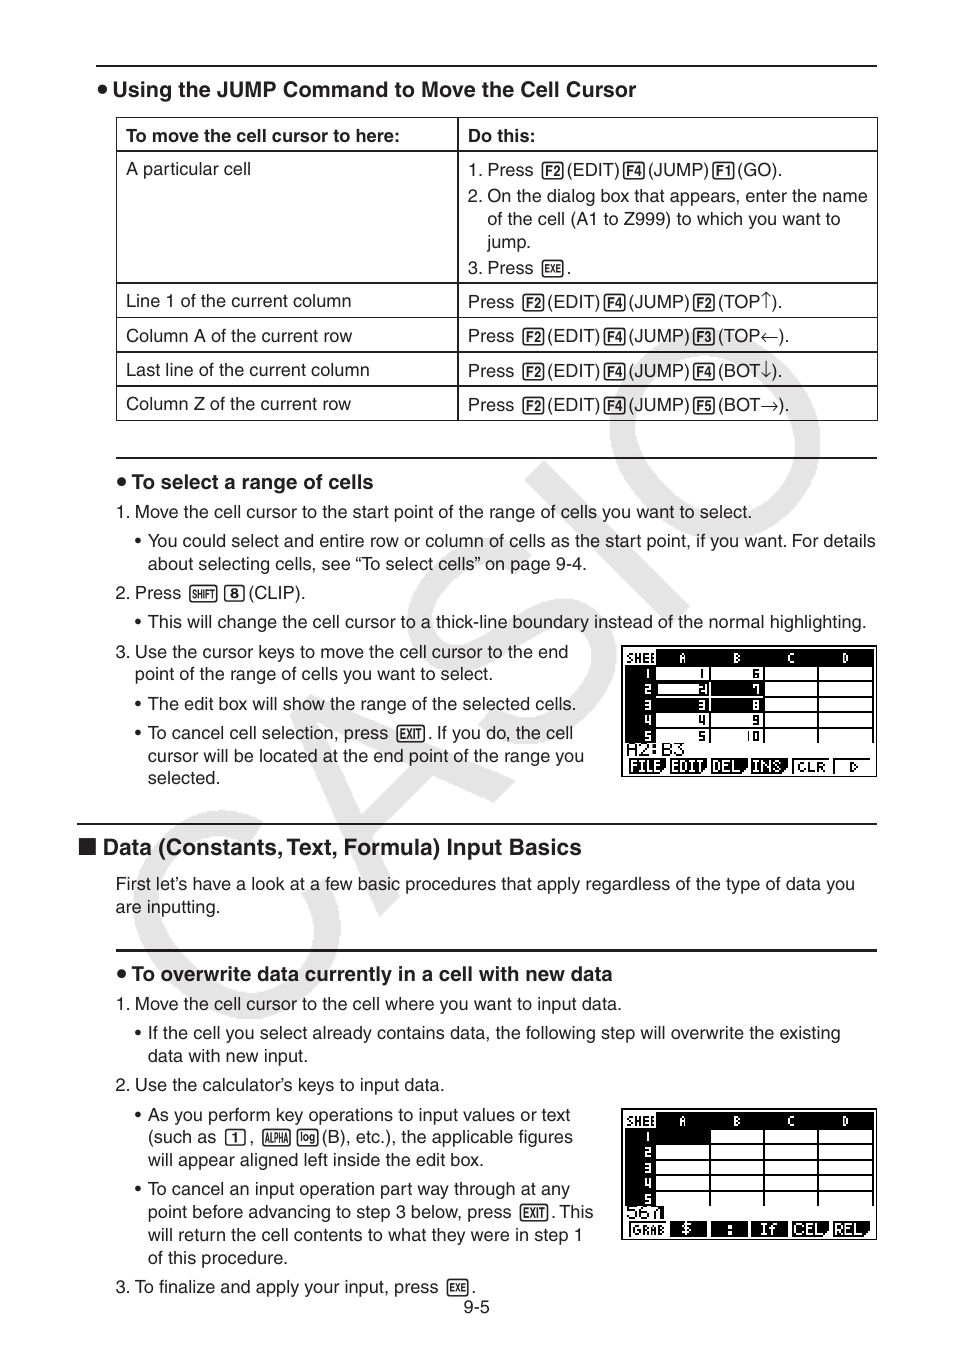 I data (constants, text, formula) input basics | Casio FX-9750GII User  Manual | Page 259 / 402 | Original mode